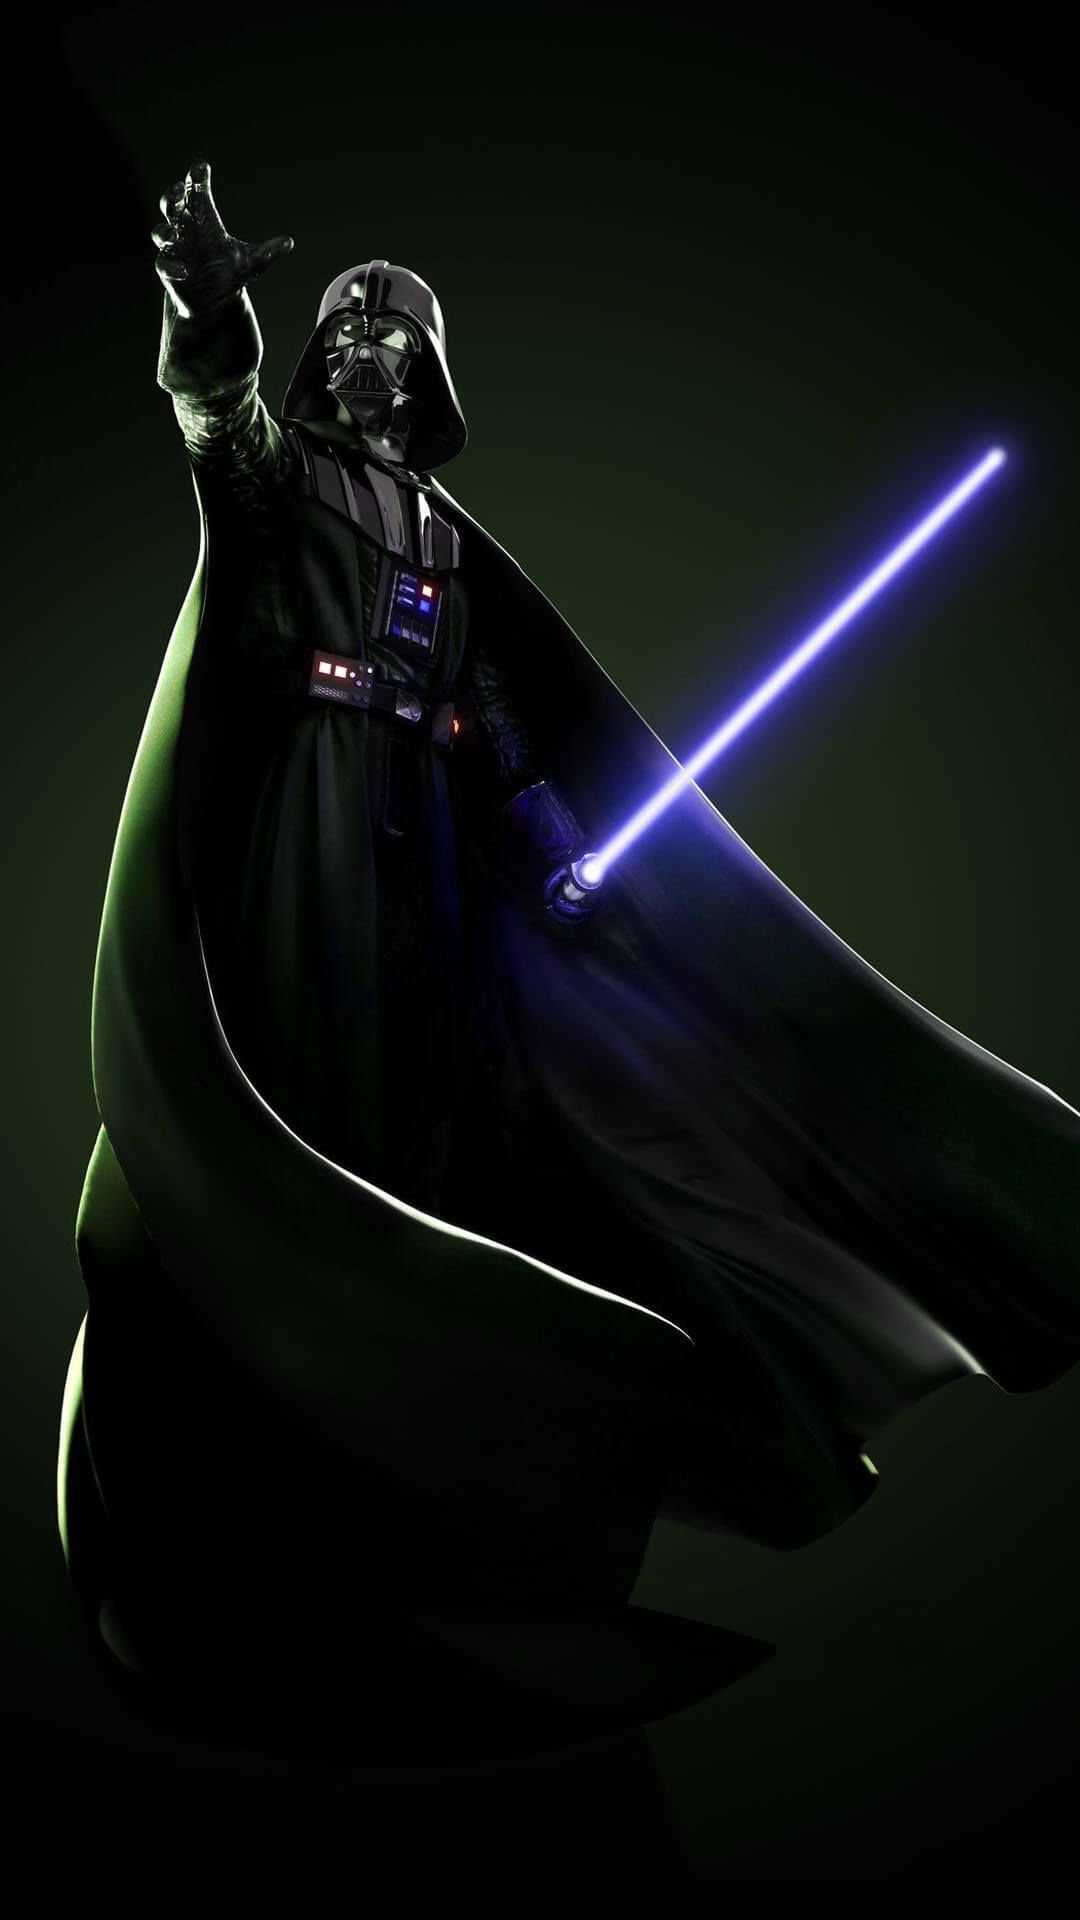 Best Darth Vader Wallpaper For iPhone